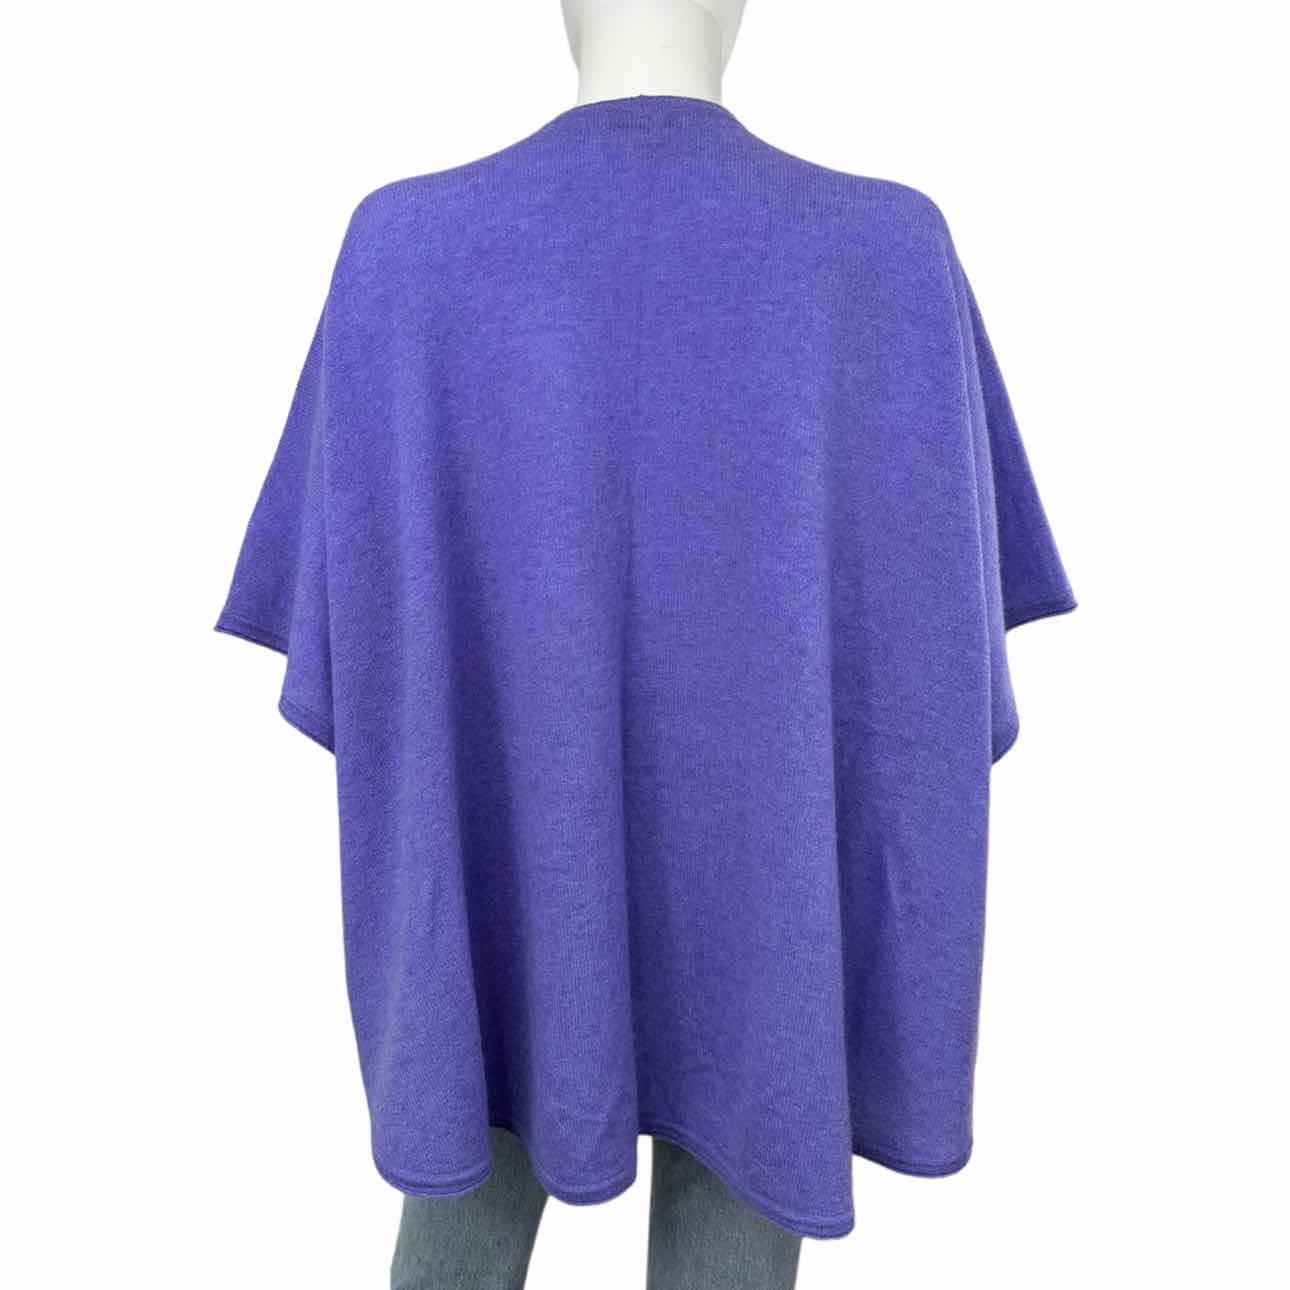 White and Warren purple cashmere sweater cardigan ￼